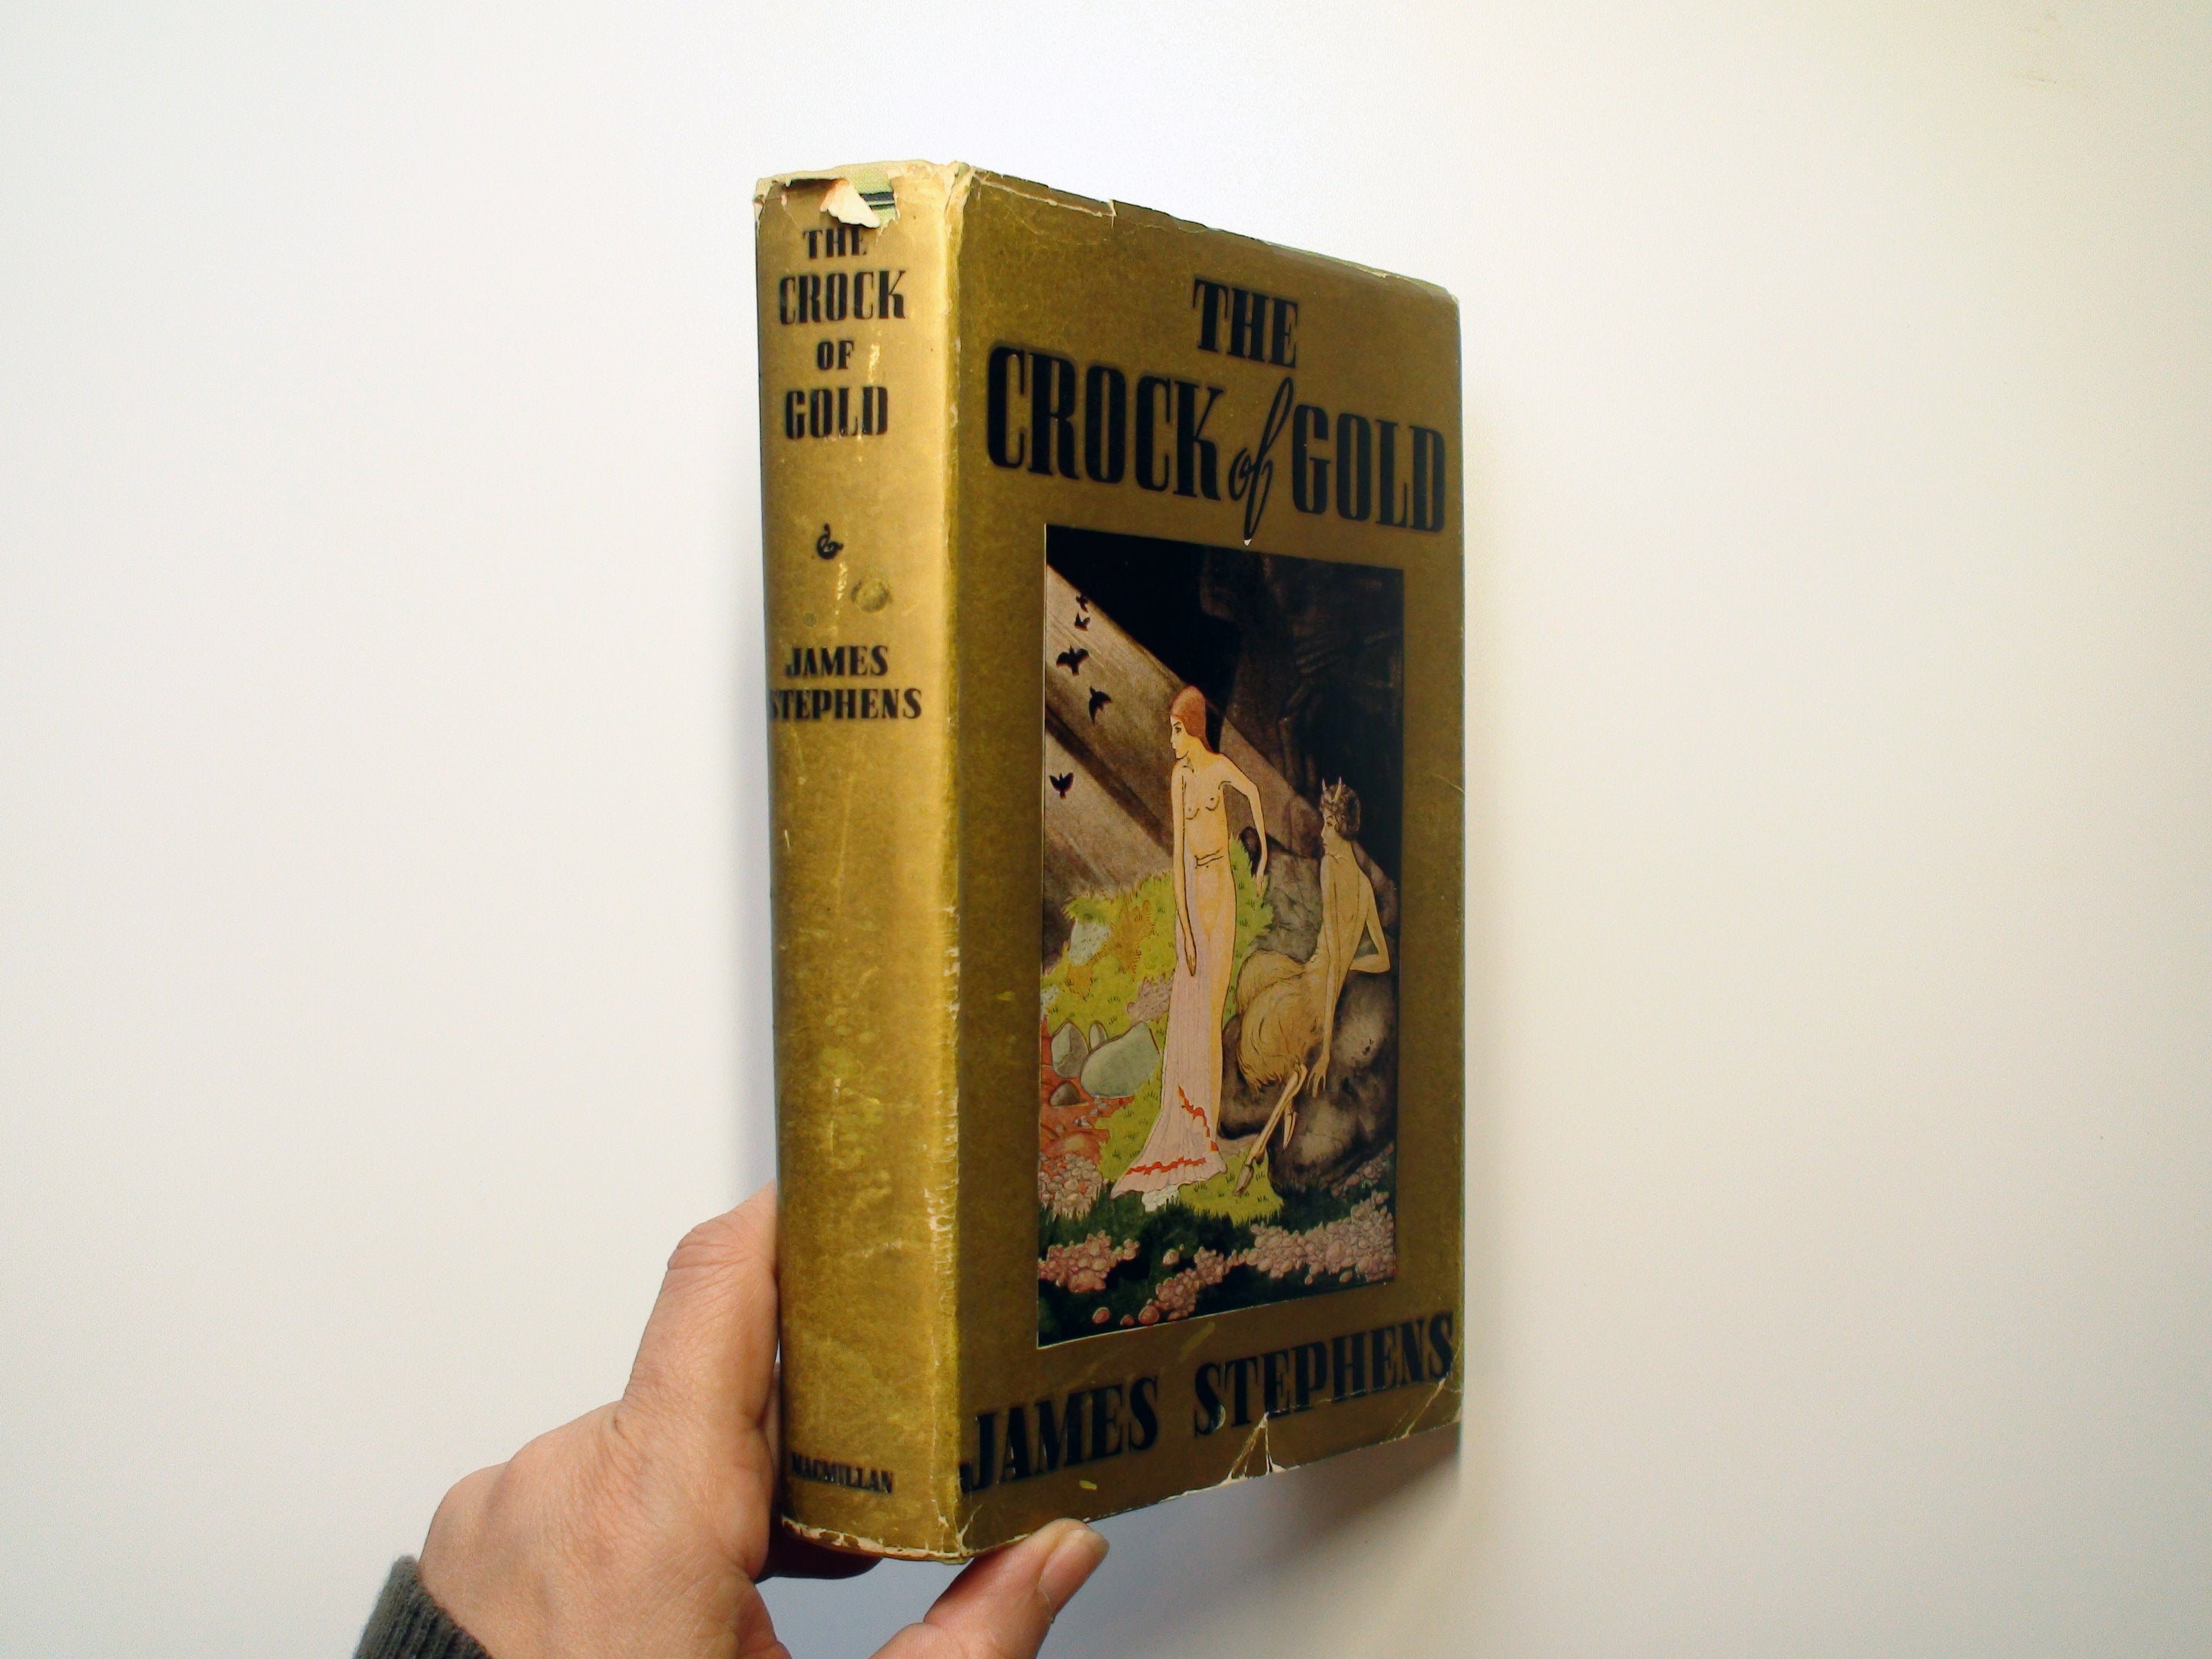 The Crock of Gold, James Stephens, w D/J, Macmillan Co., 1937, Vintage Fairytale